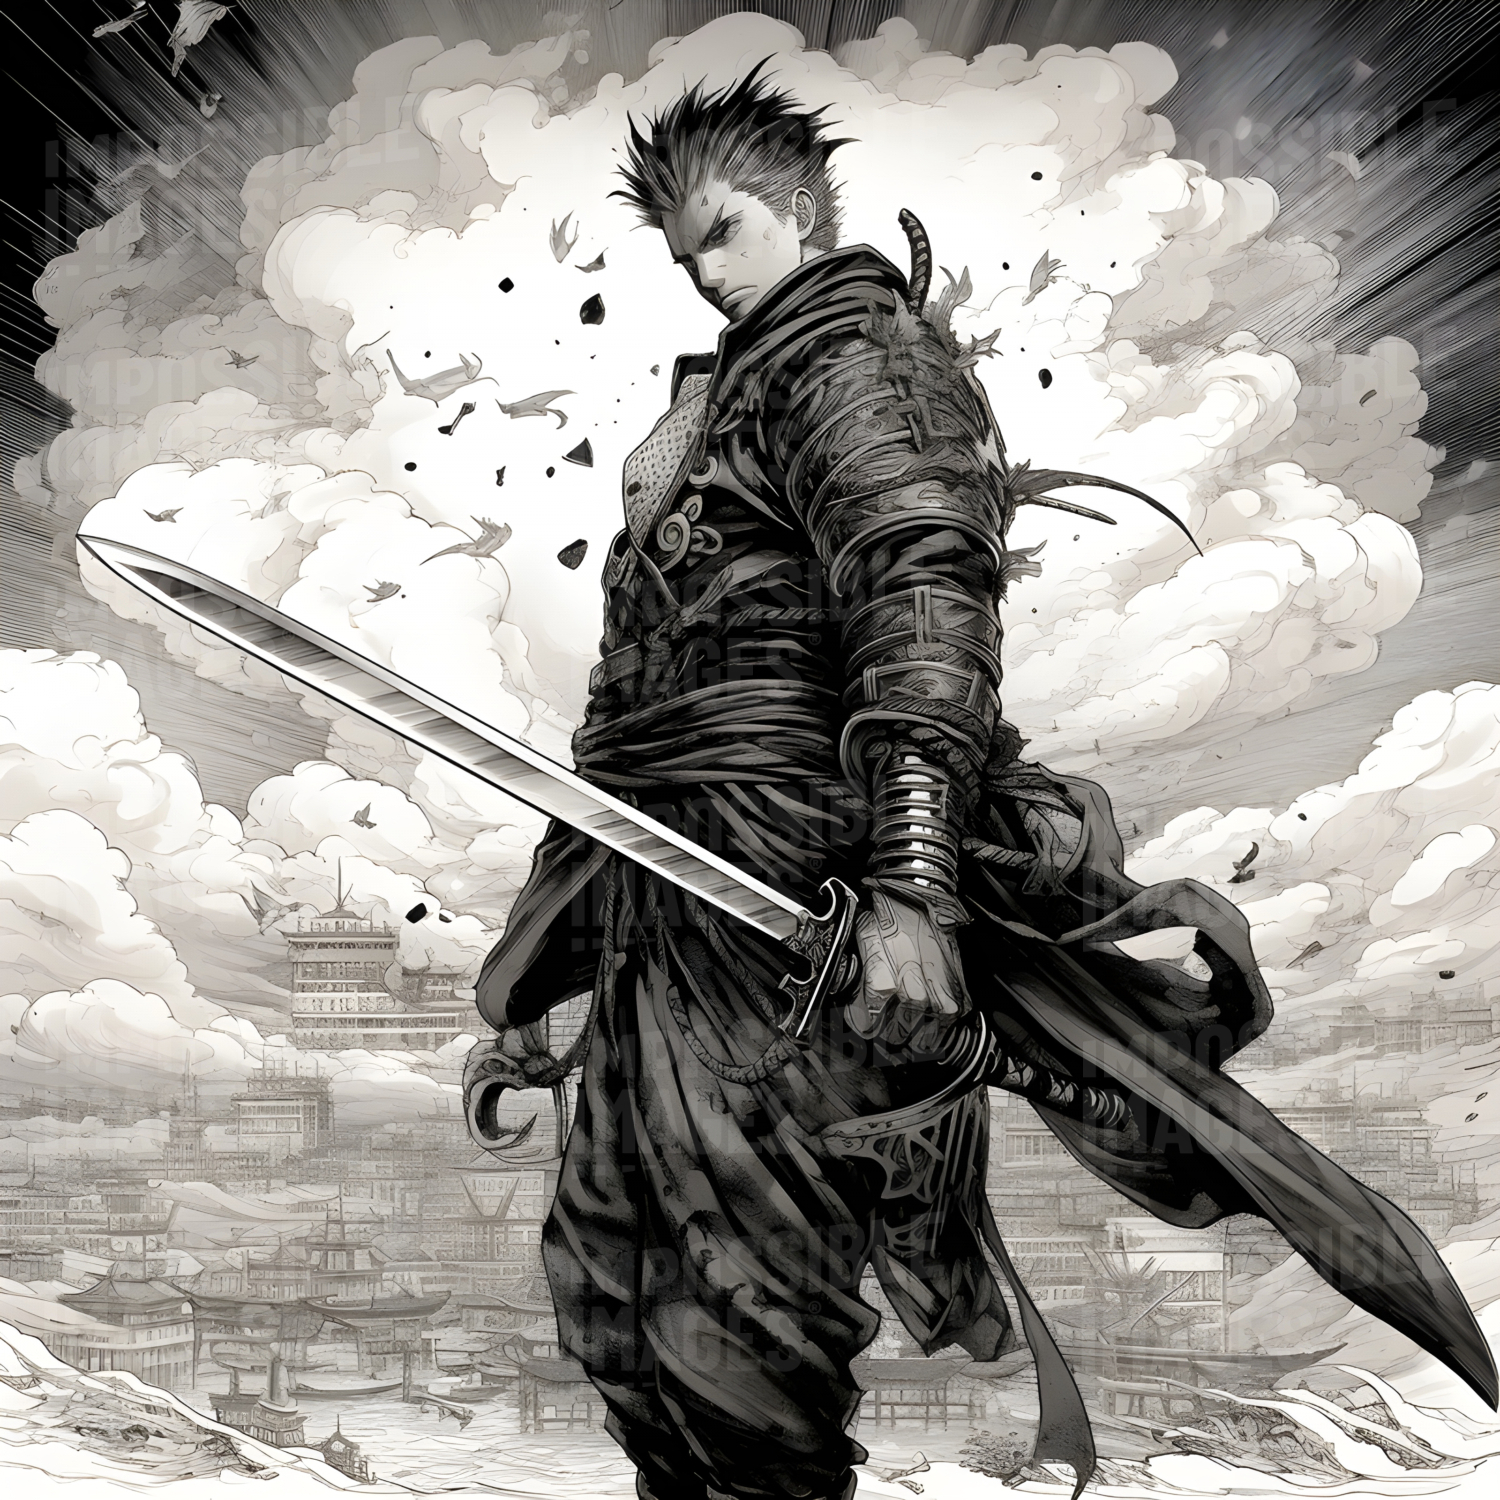 Black and white illustration of a fantasy manga swordsman